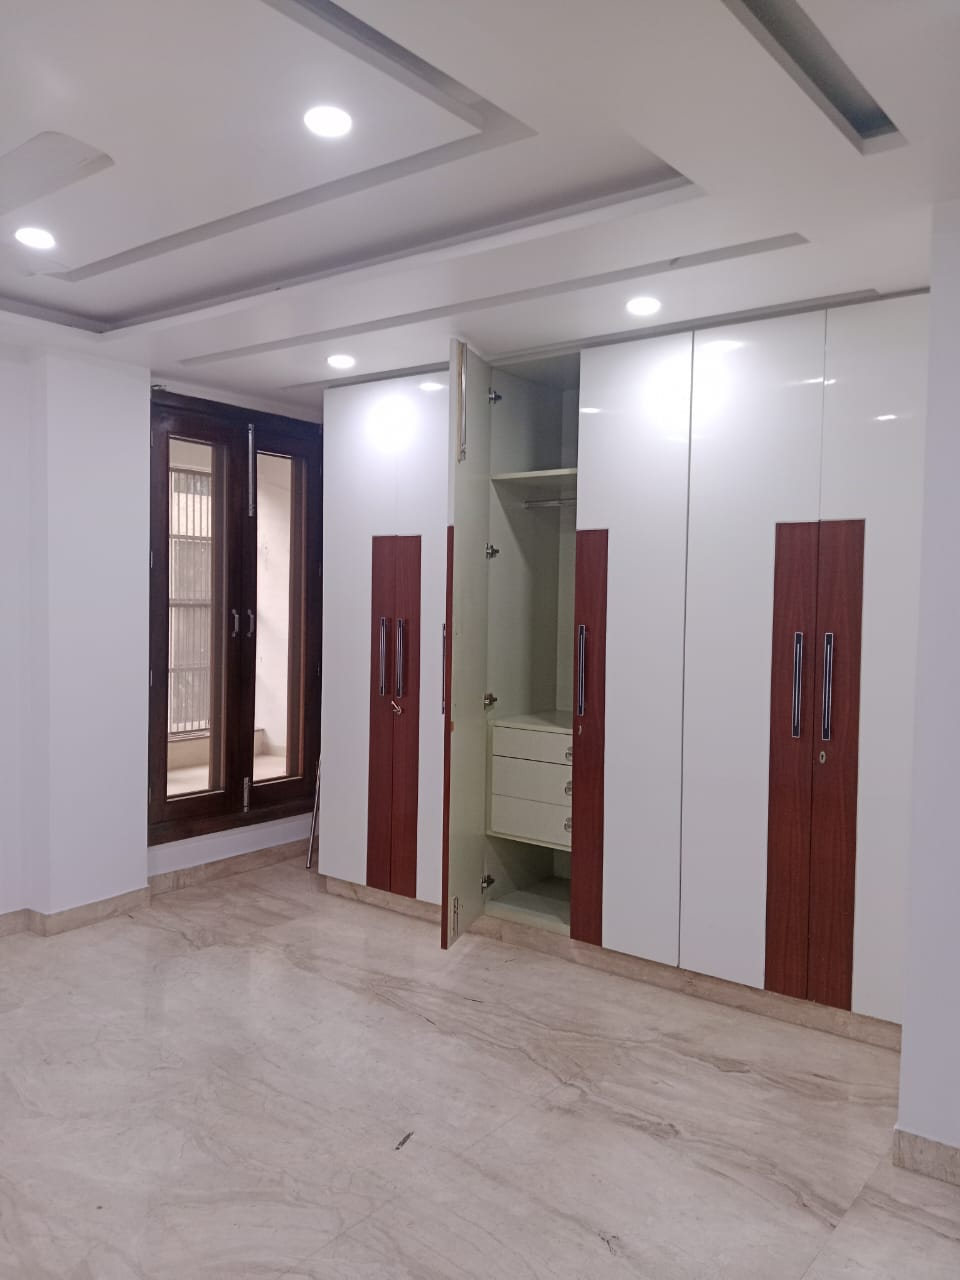 Elevated Living: 3 BHK Builder Floor for Rent in Janakpuri B1 Block - Top Floor, ₹55K/Month